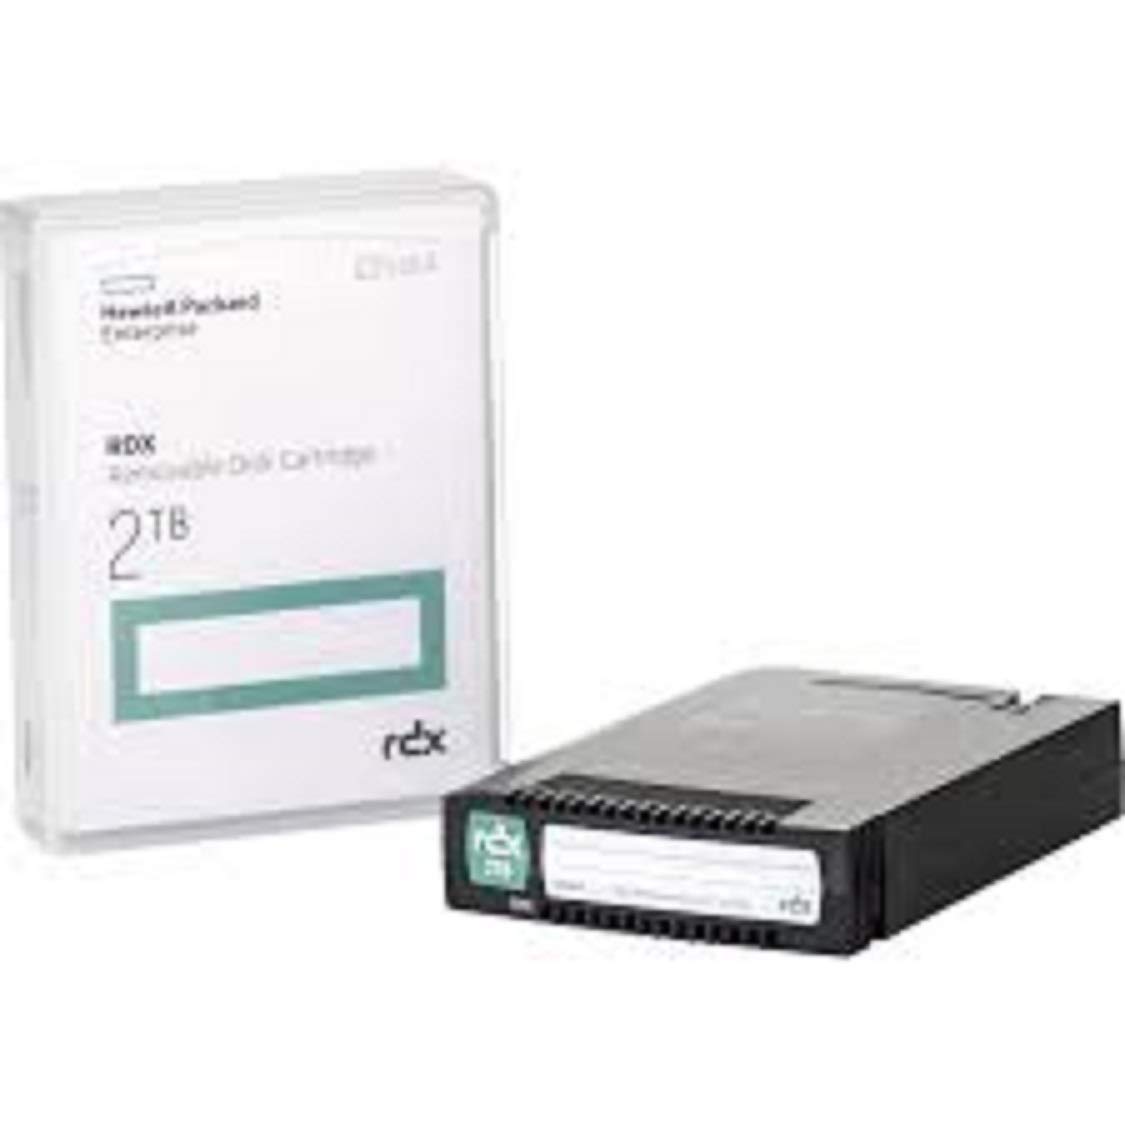 HP 2 TB 25 RDX Technology Hard Drive cartridge